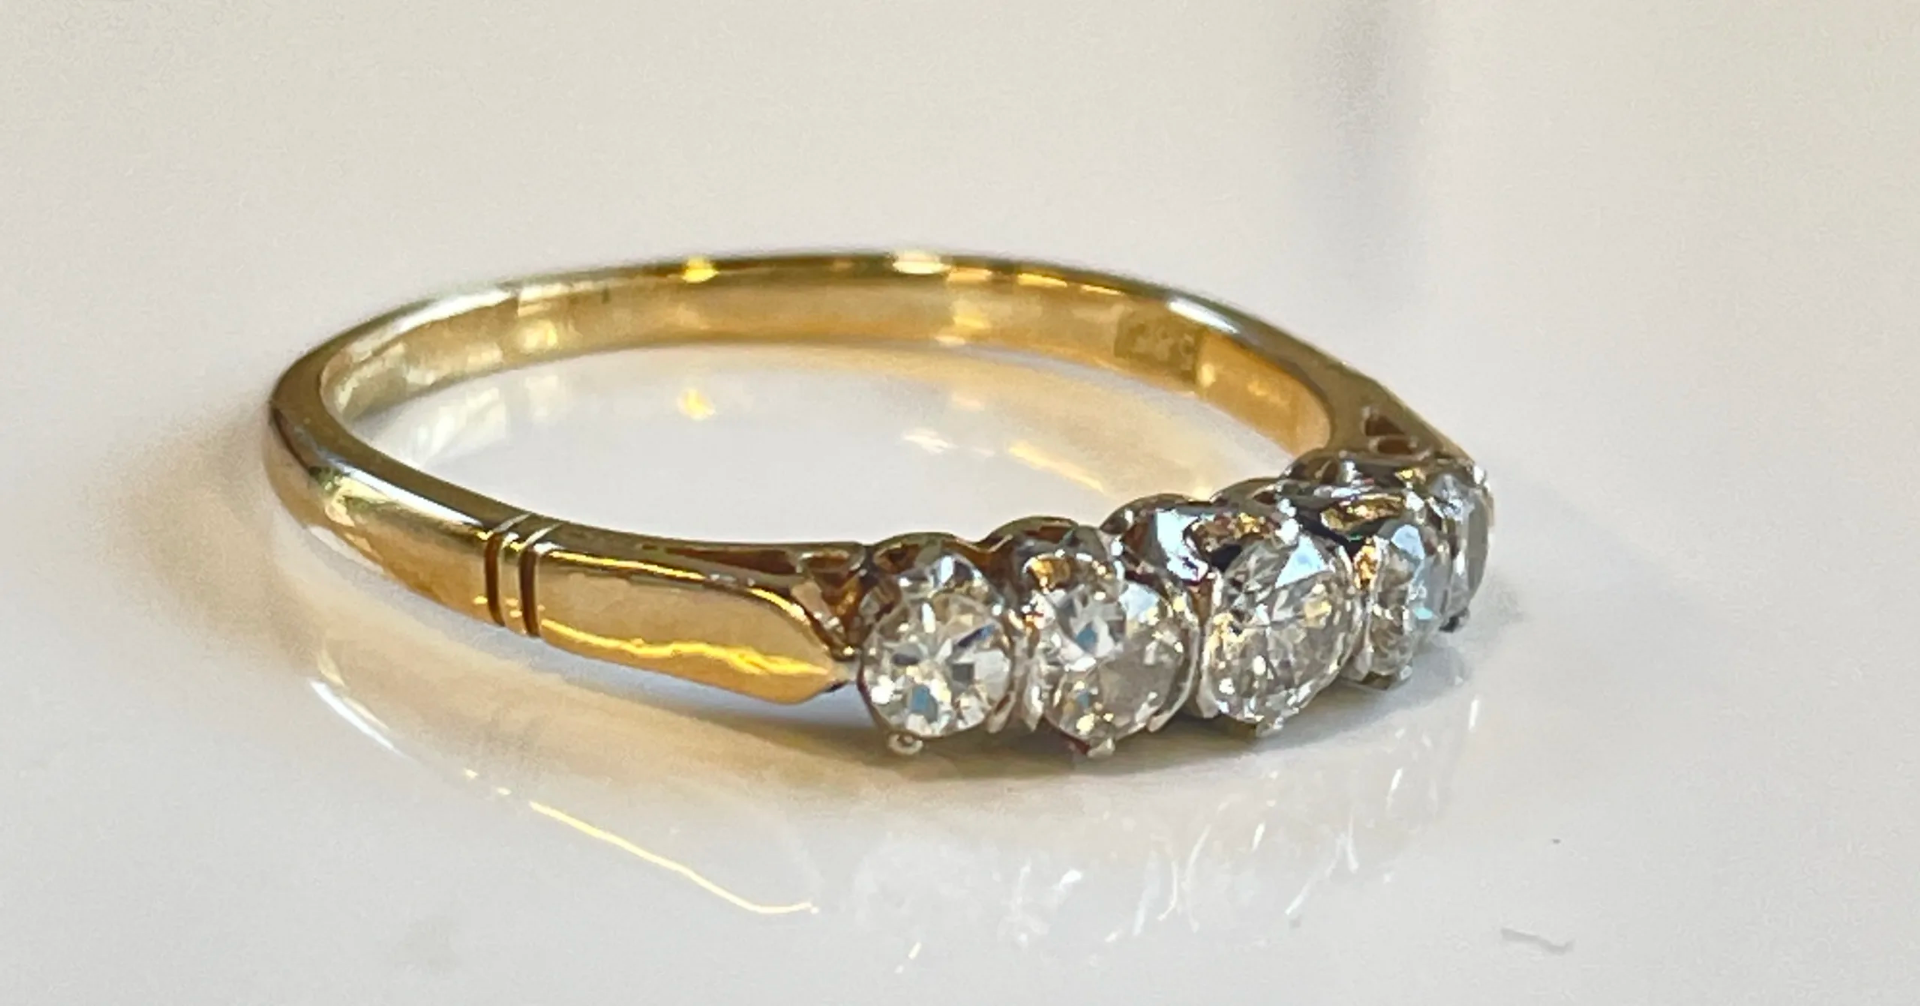 Antique Diamond Ring 14K Yellow Gold approx. 0.24ct Diamonds - Image 3 of 3